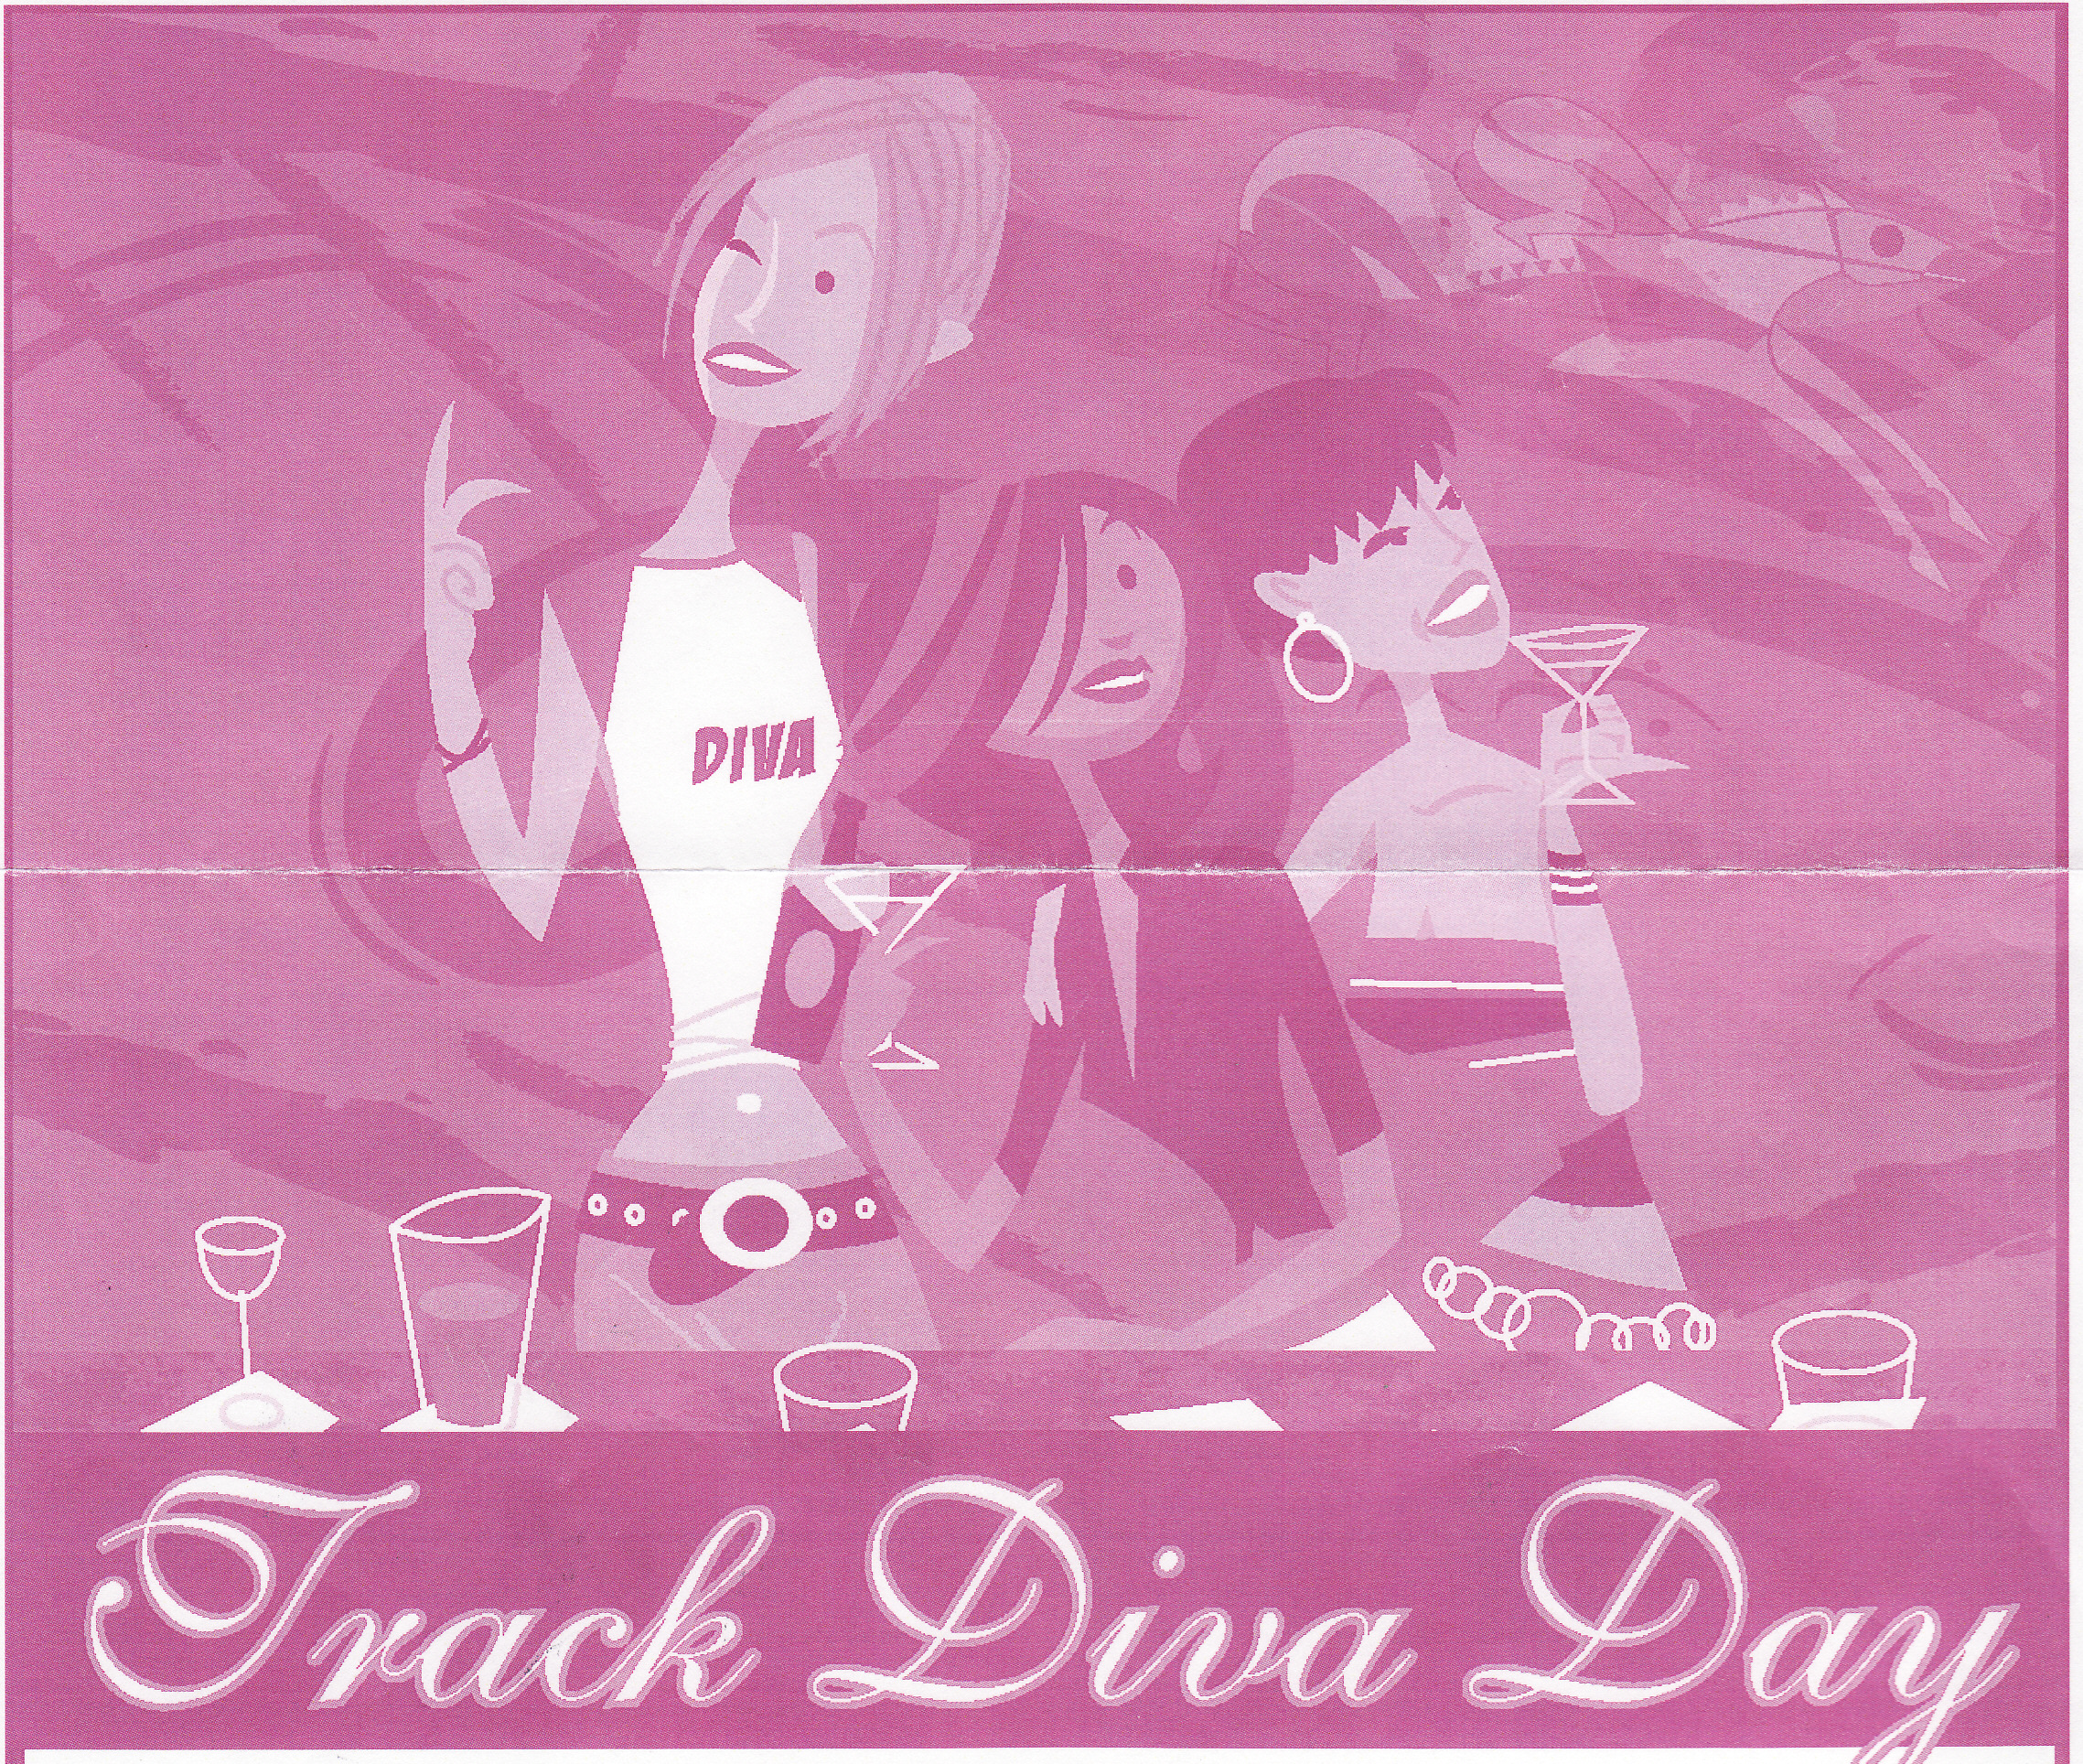 Track Diva Day